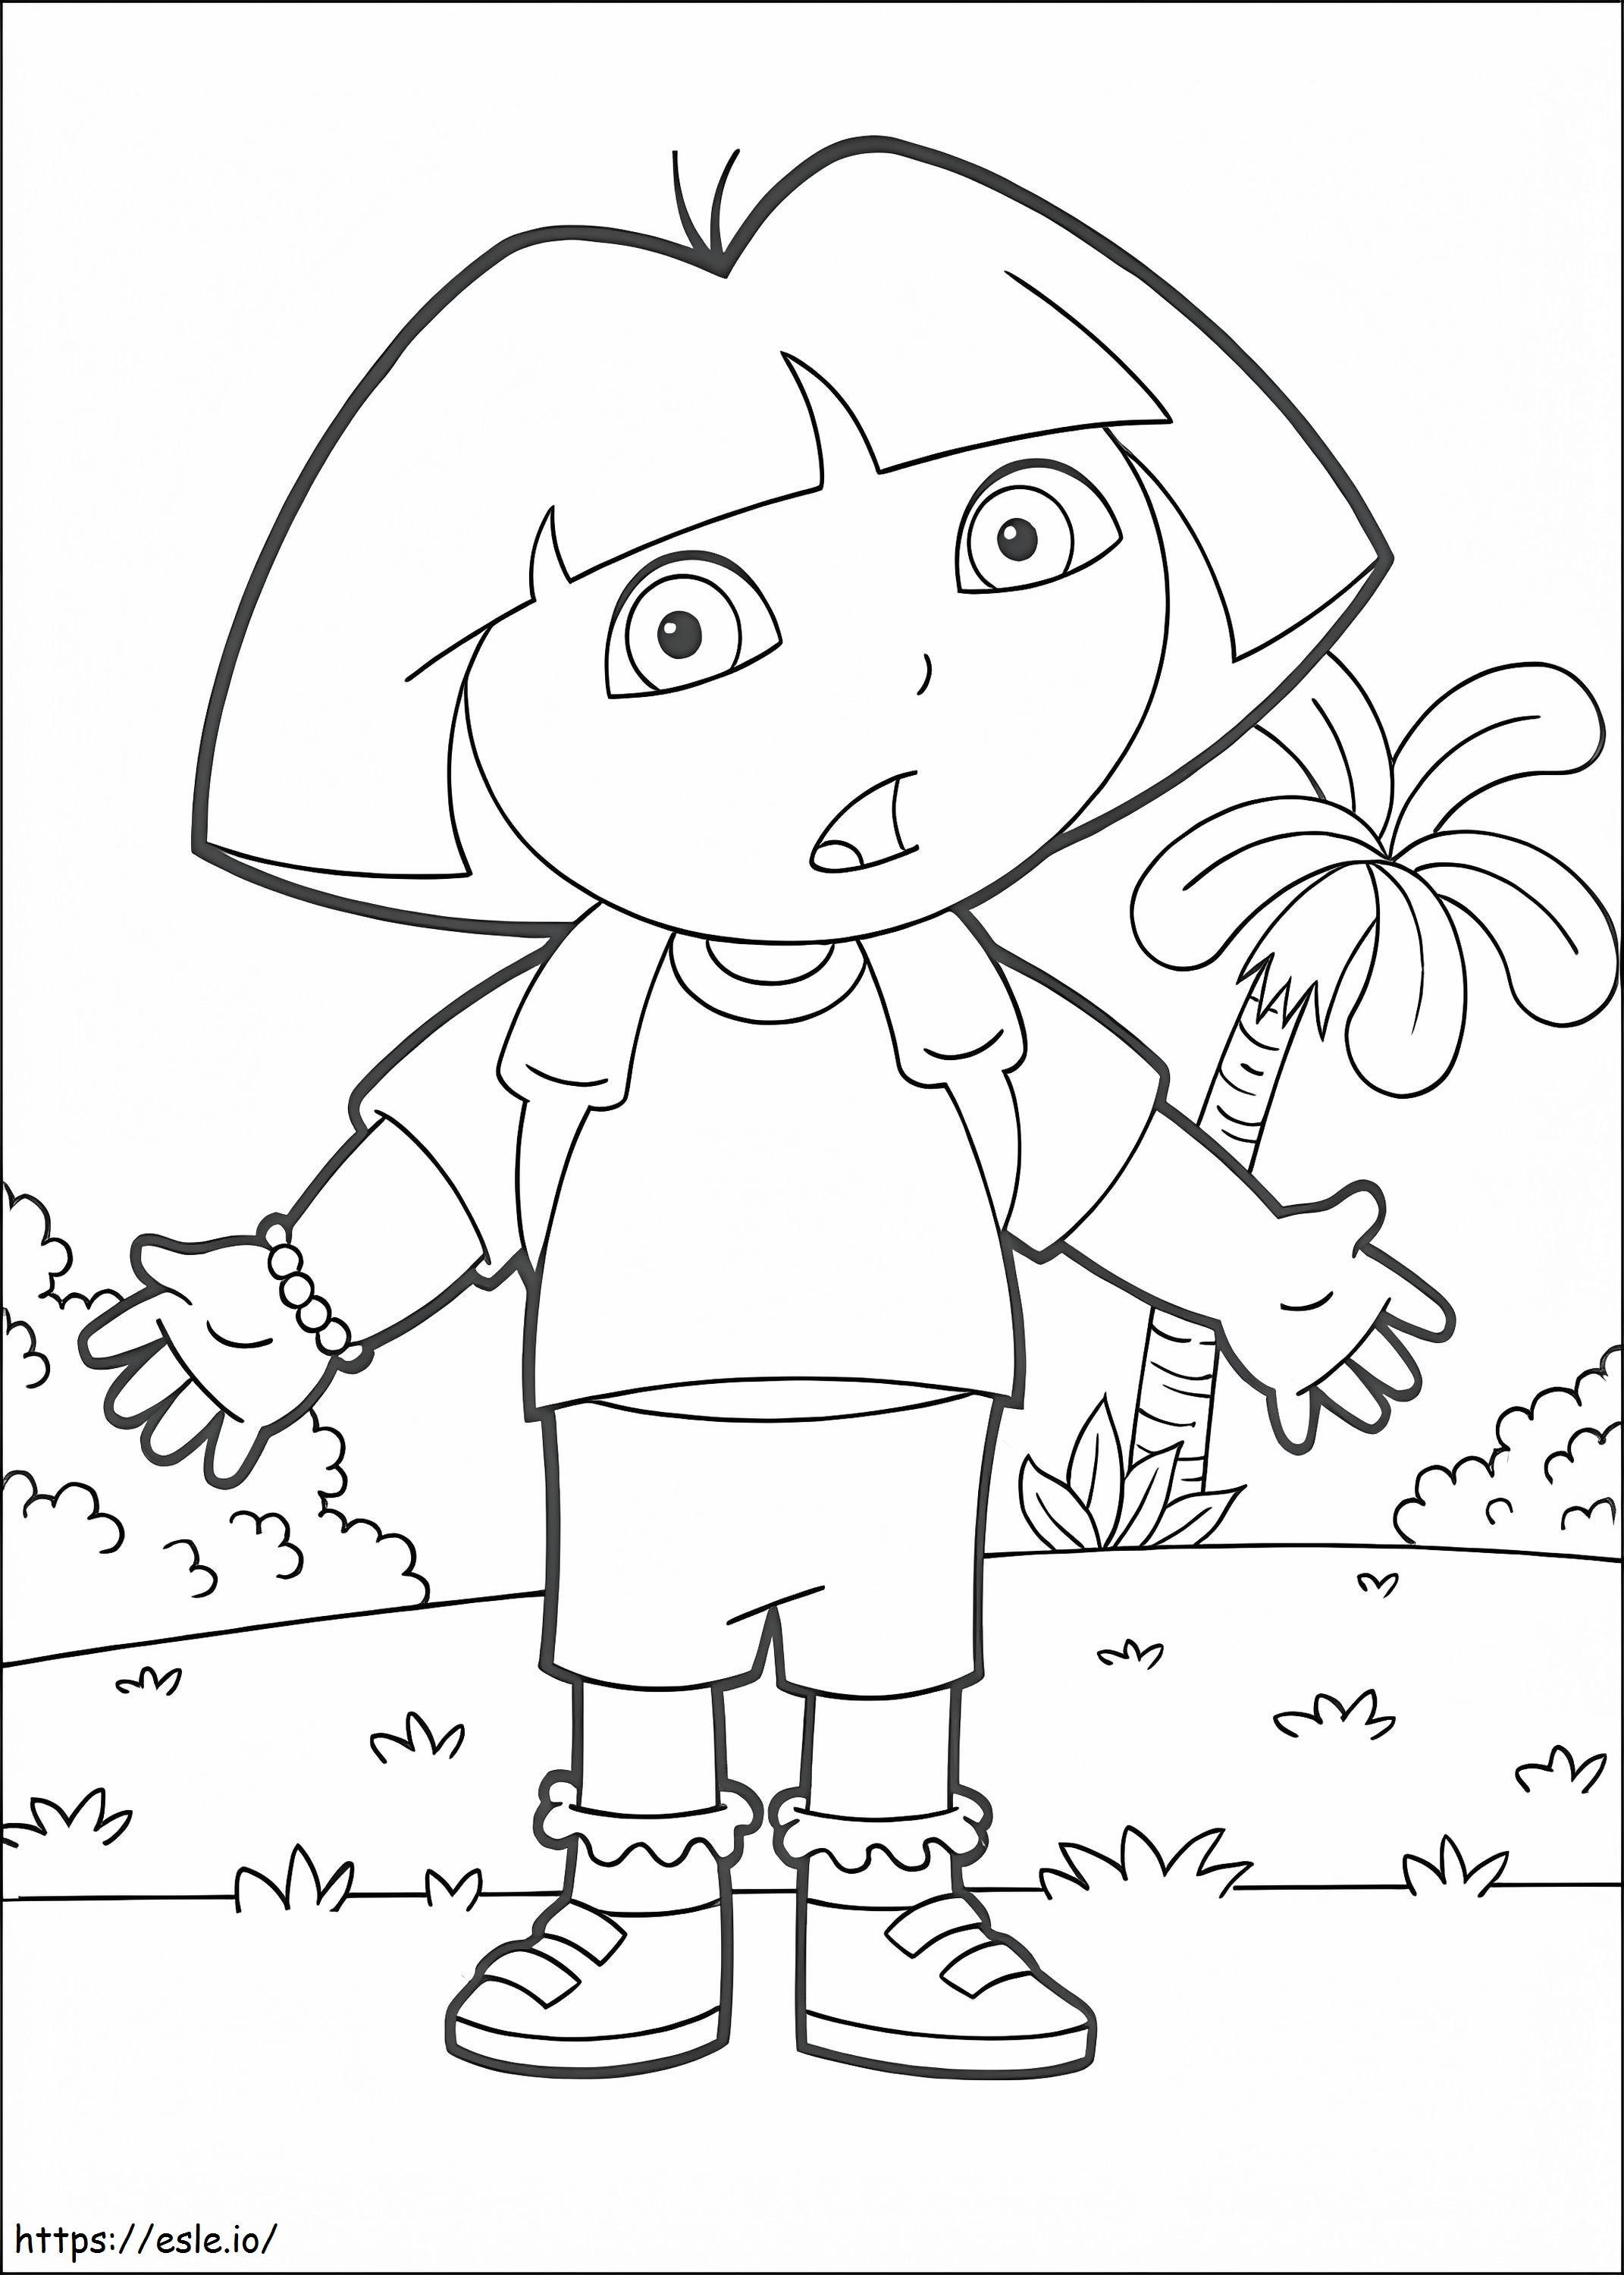 Confused Dora coloring page